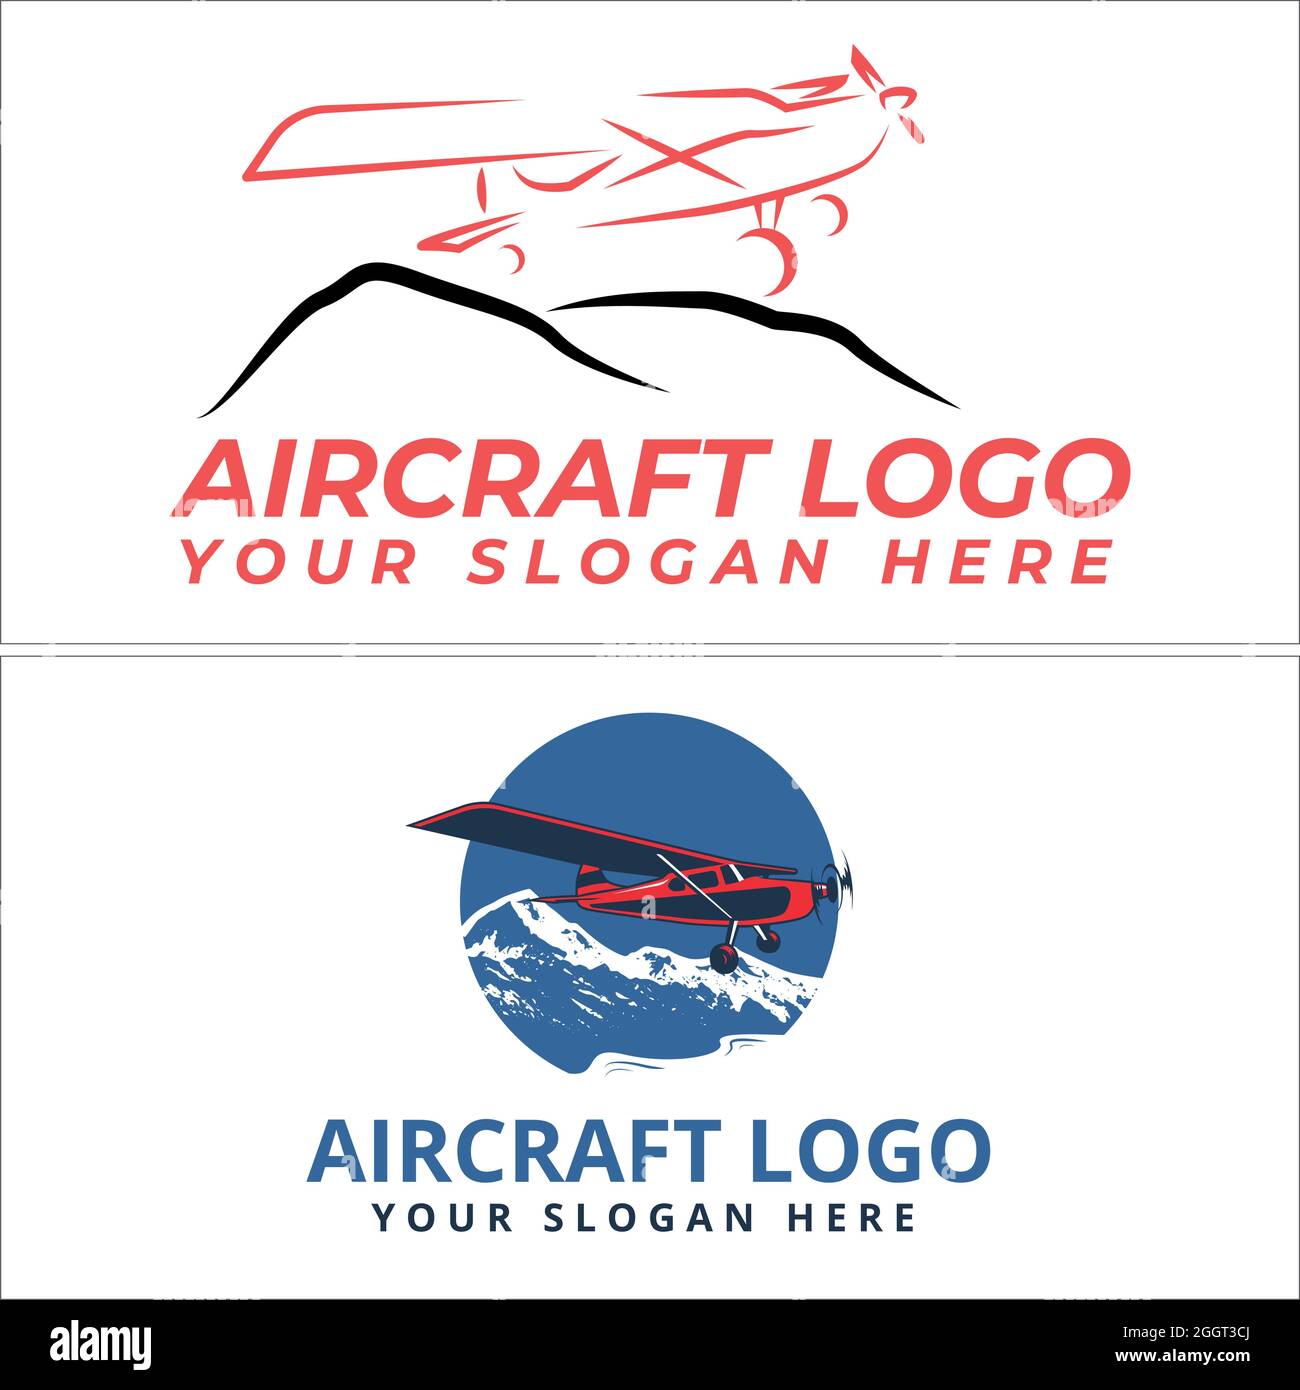 Avion avion avion avion avion avion avion avion logo aviation Illustration de Vecteur